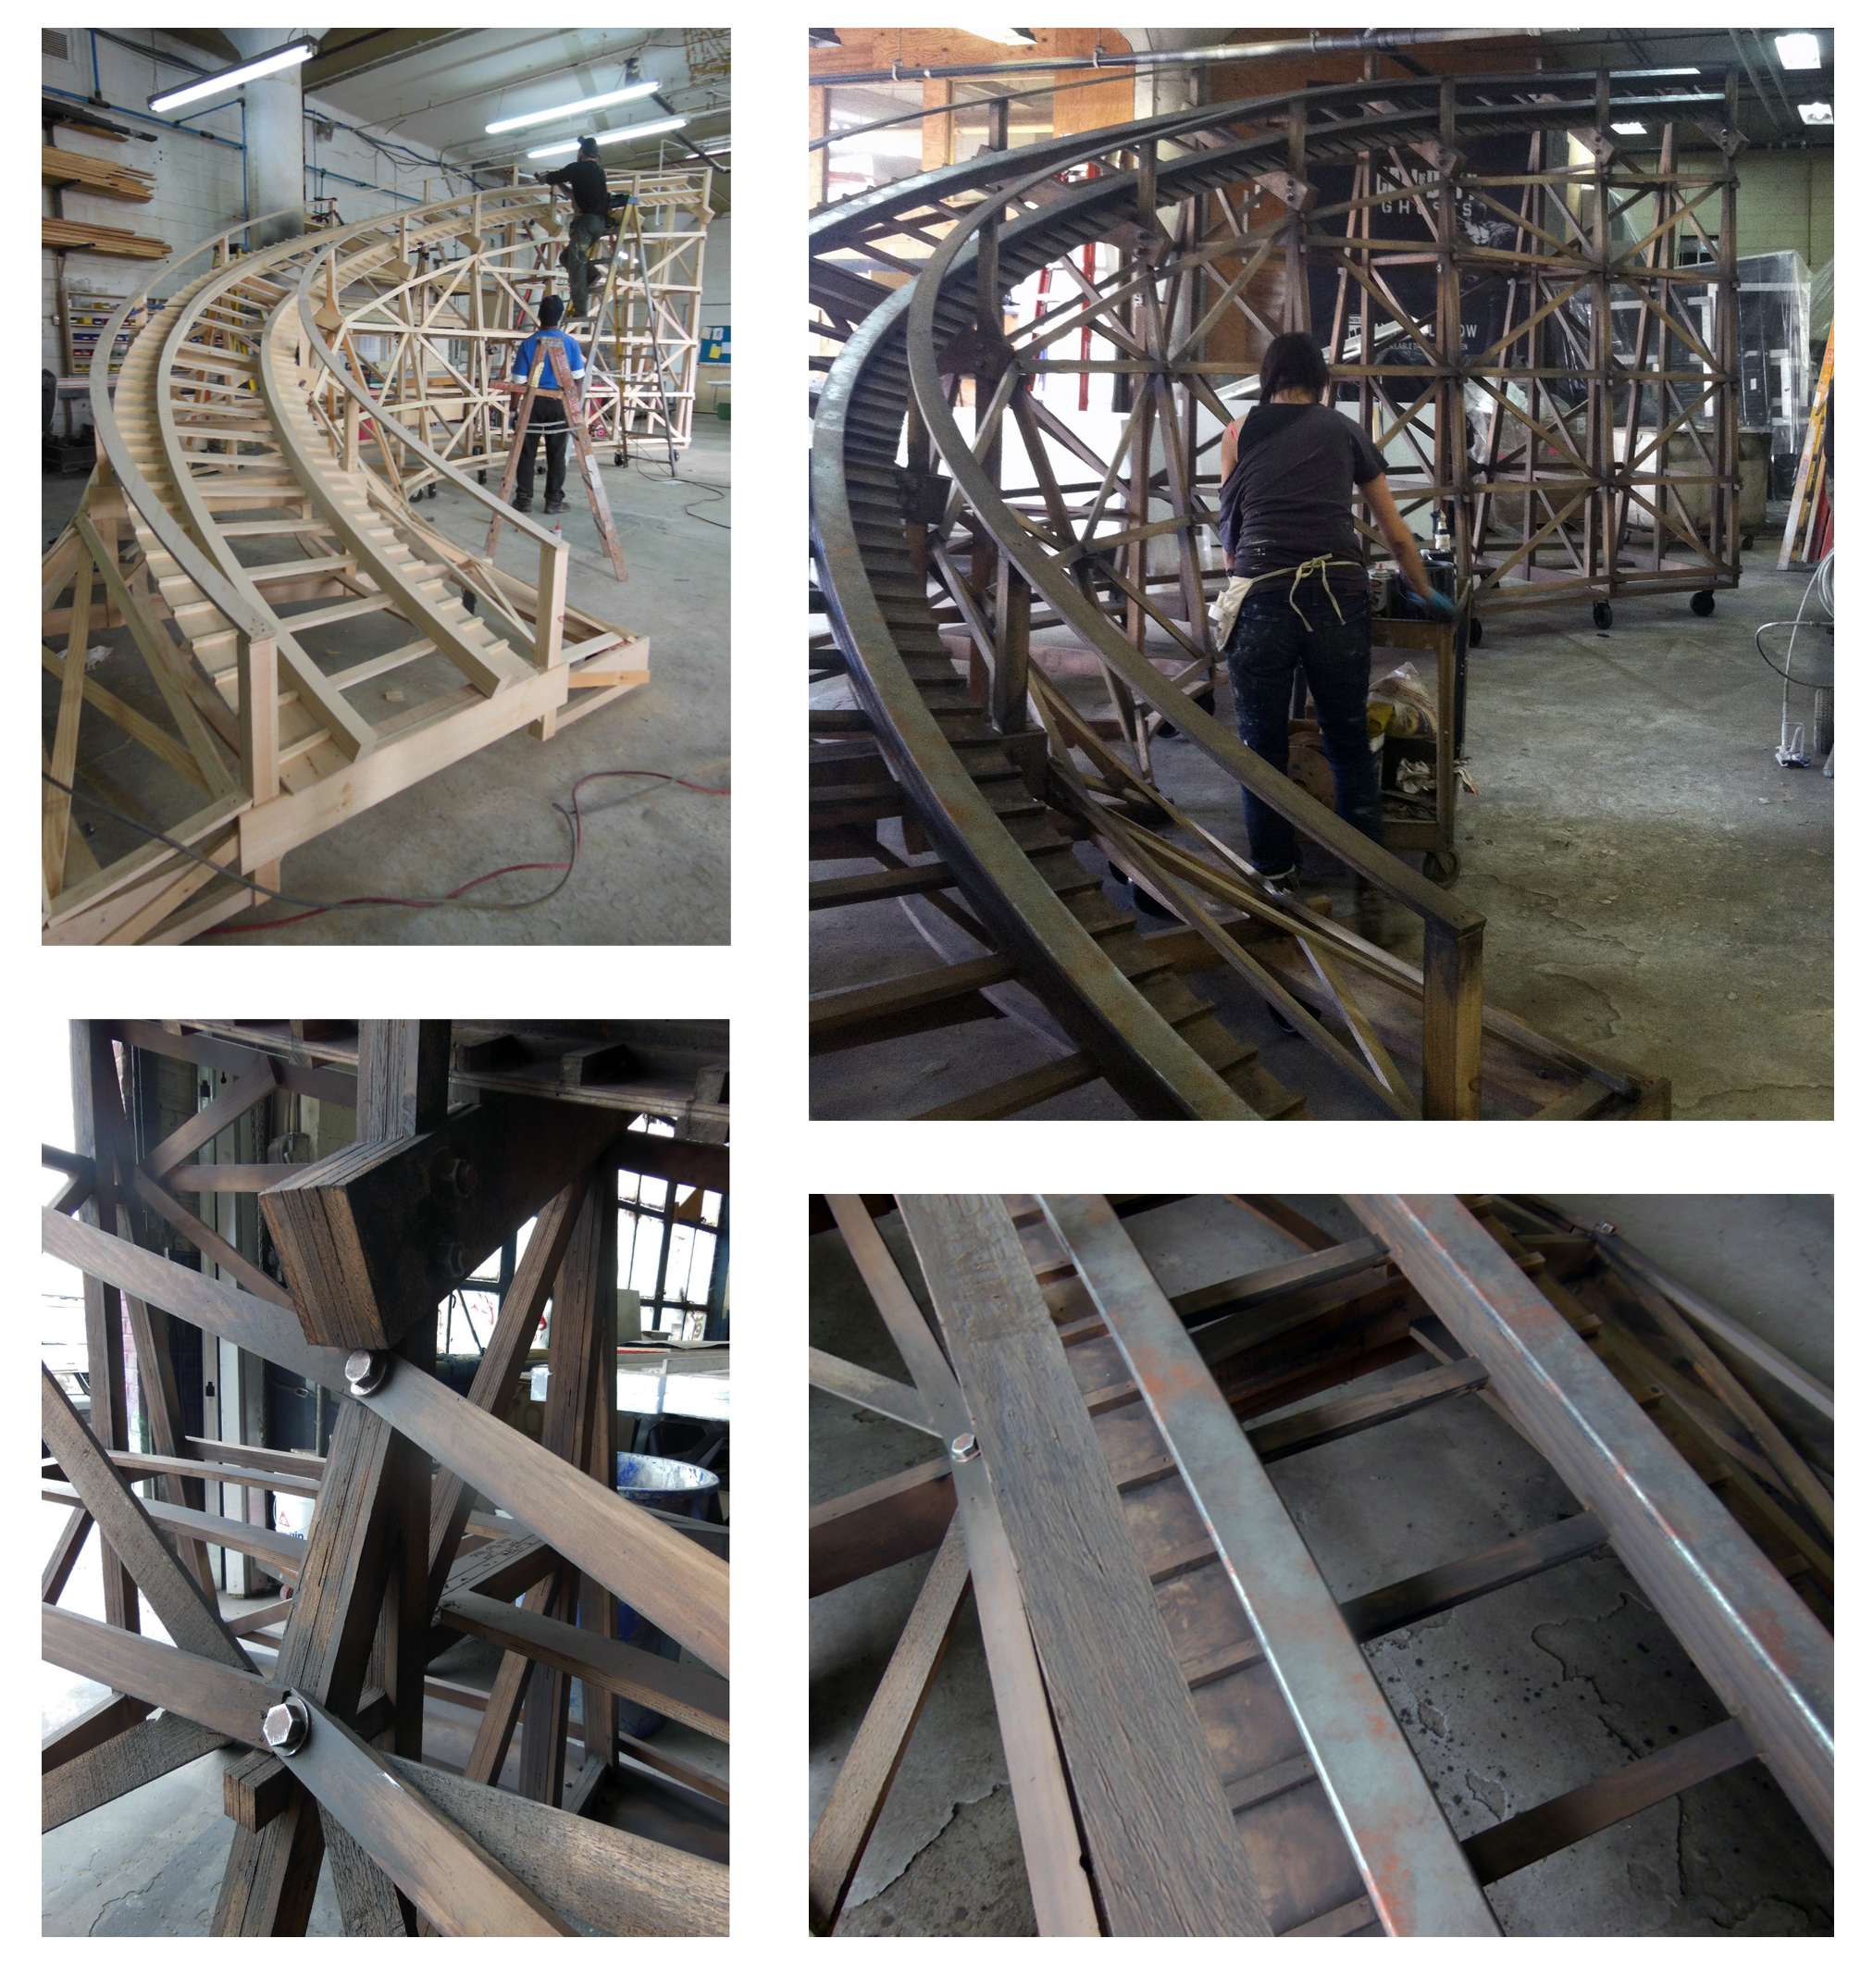 Roller Coaster in Progress Assembly